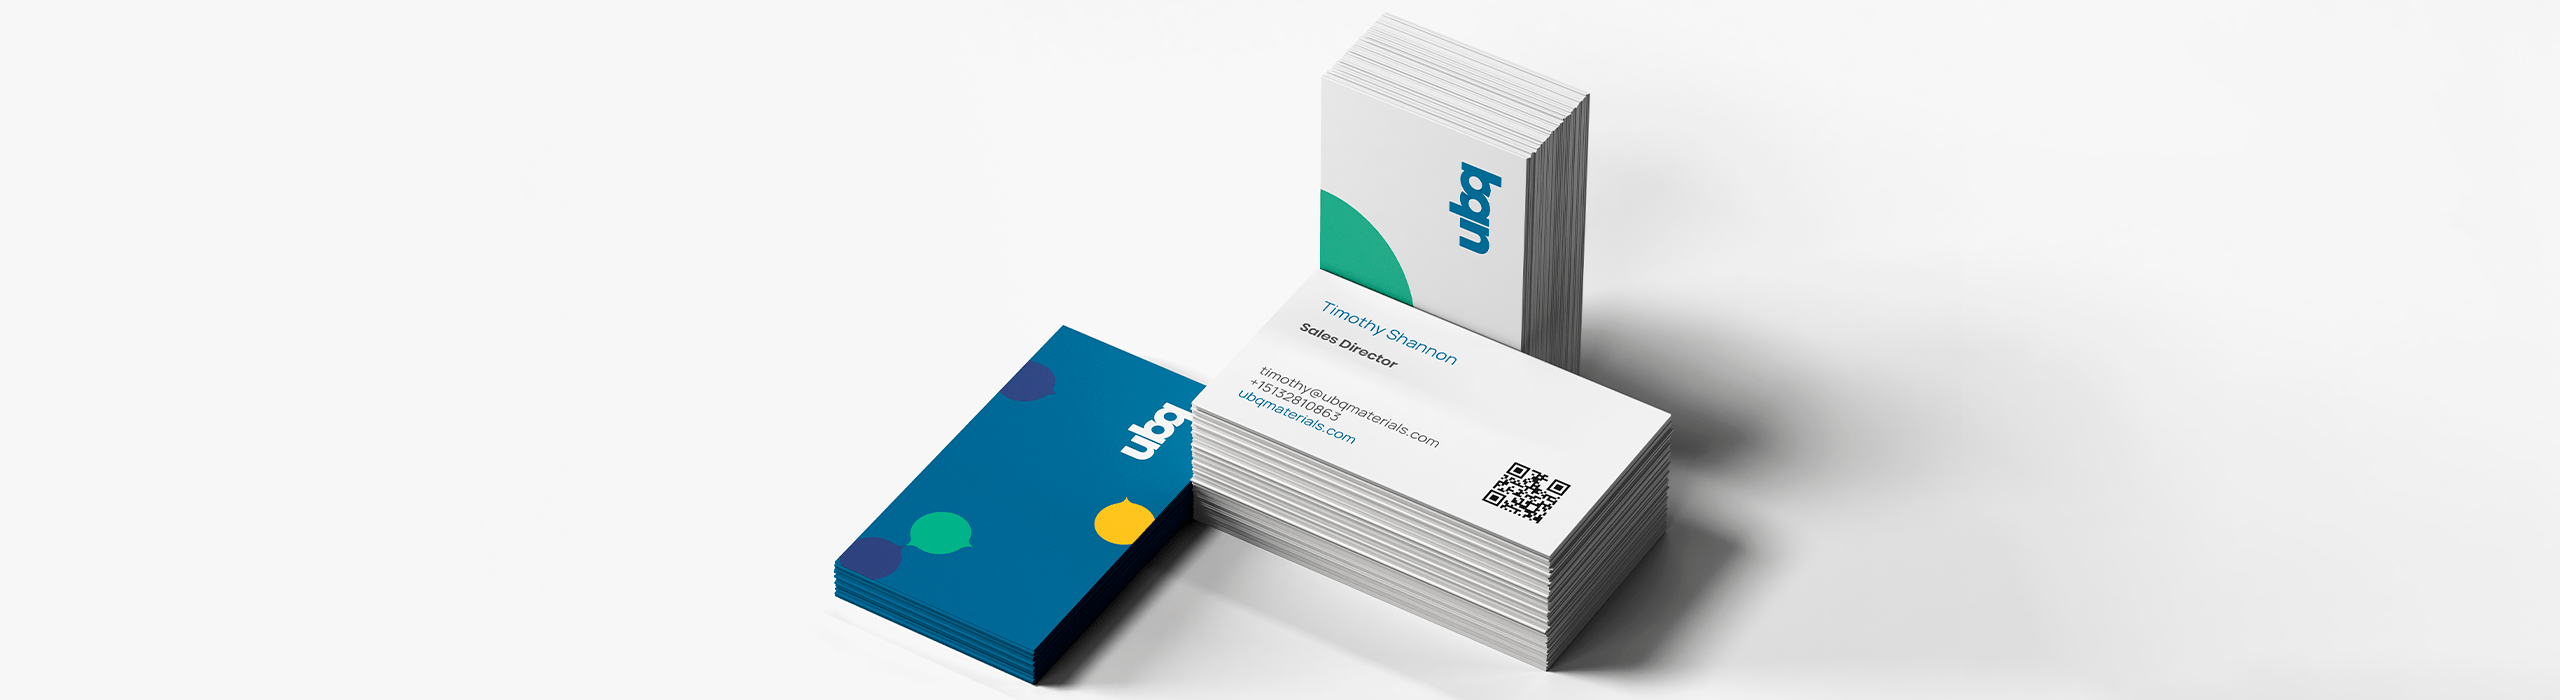 UBQ Rebrand - bus-cards - Natie Branding Agency